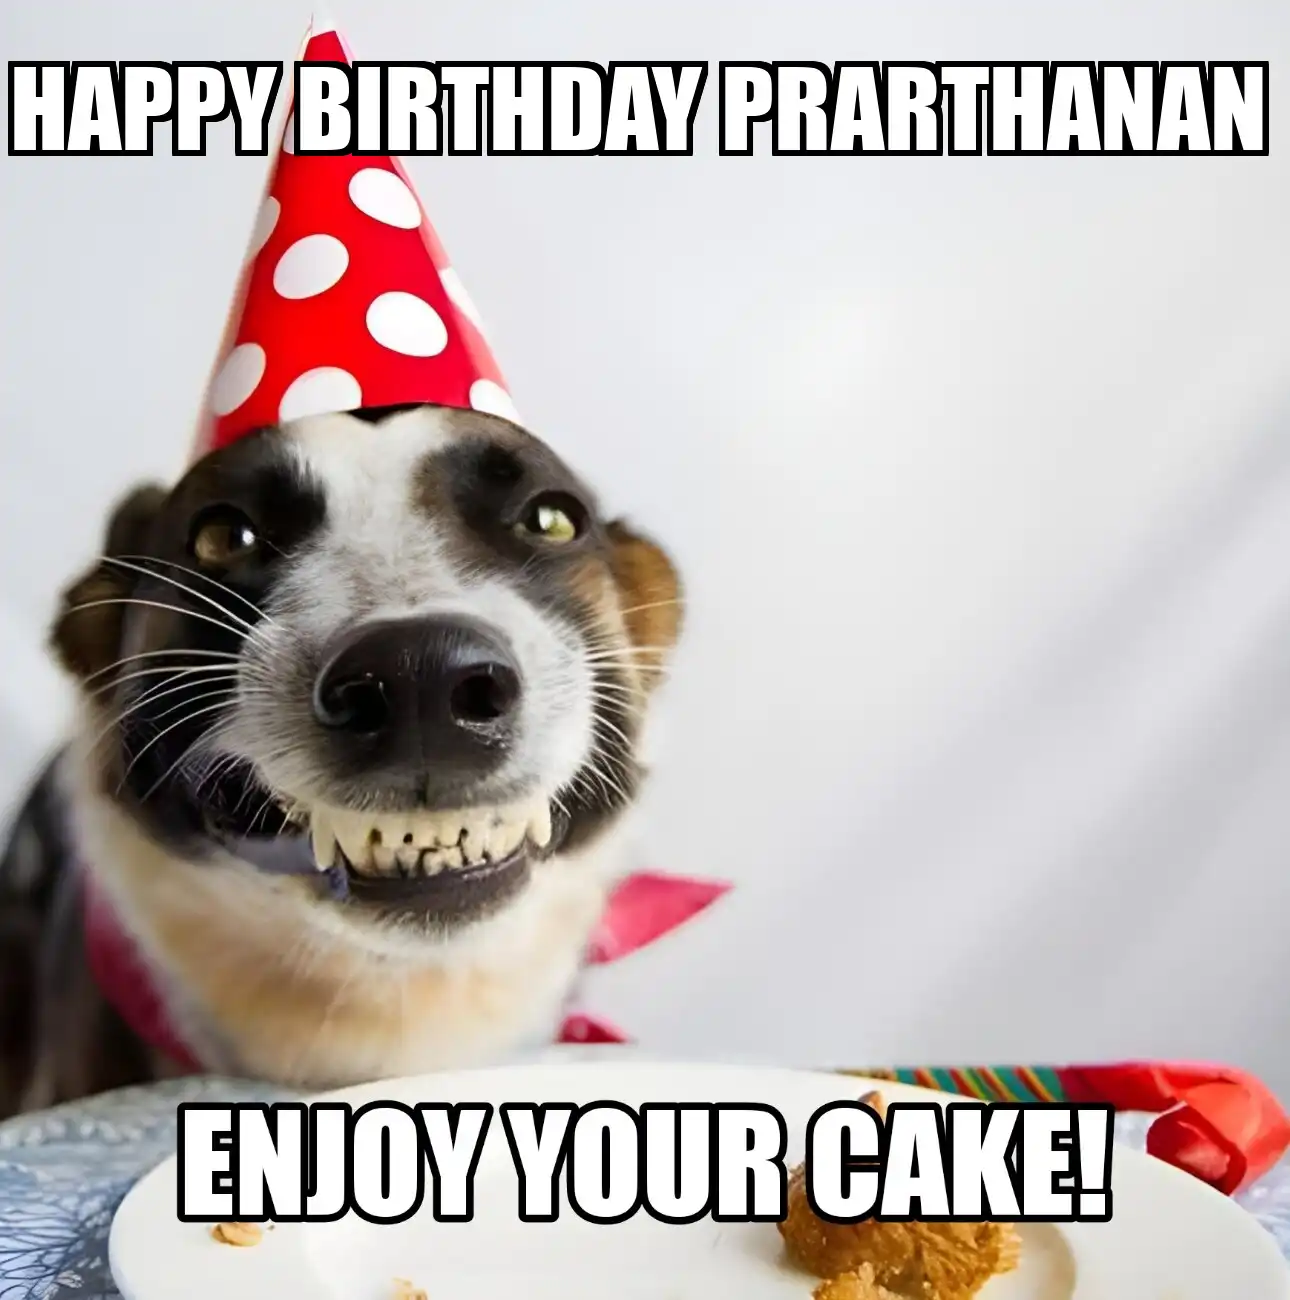 Happy Birthday Prarthanan Enjoy Your Cake Dog Meme